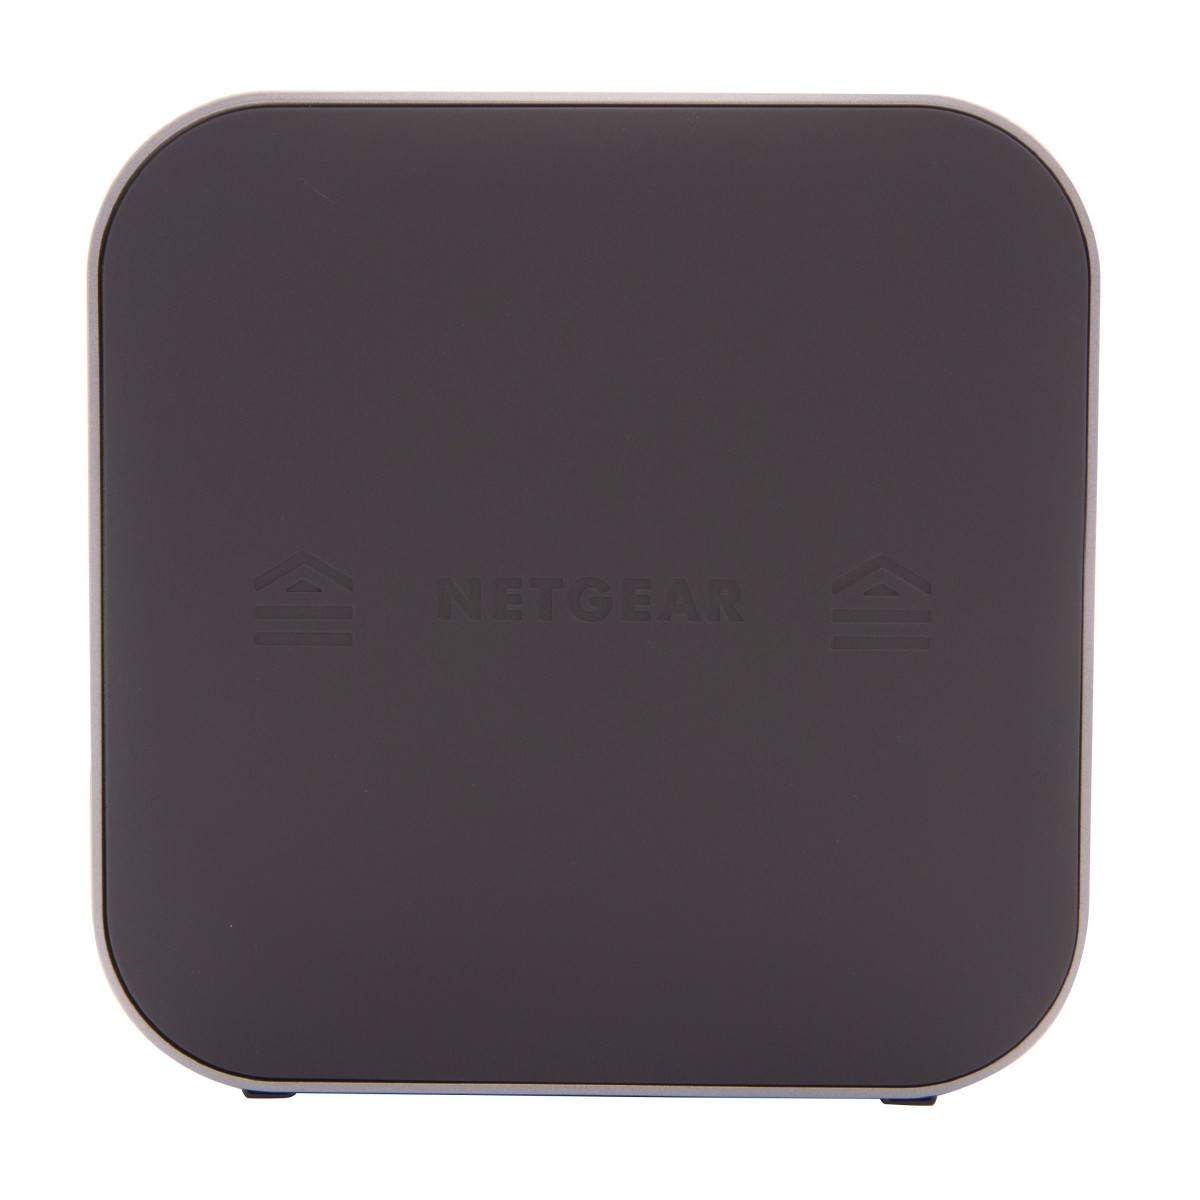 Netgear MR1100 LTE Dualband Router